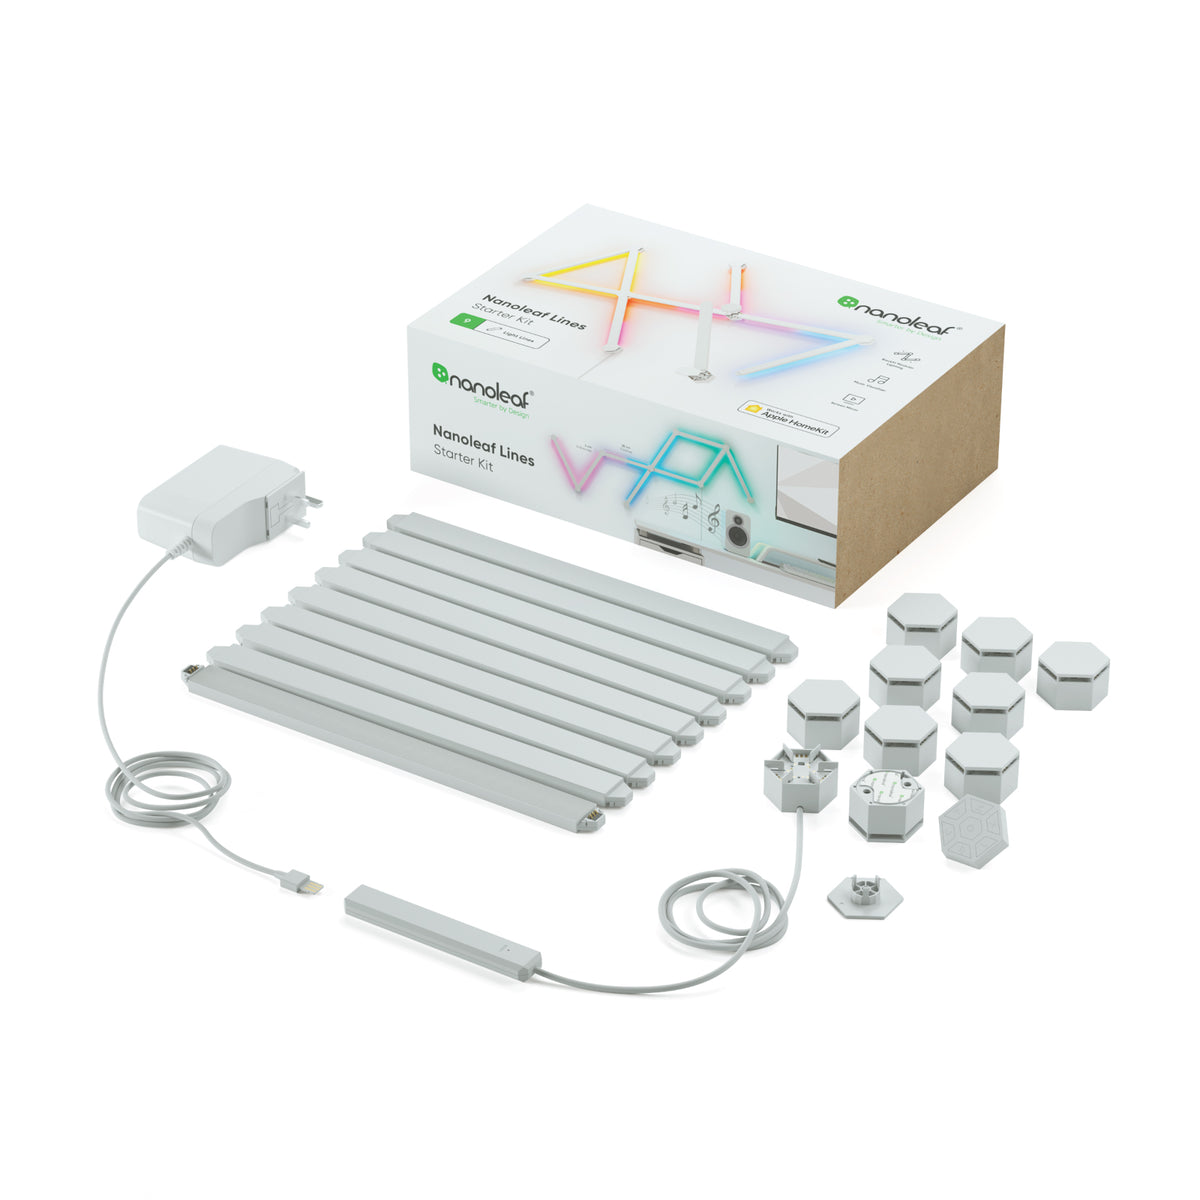 NANOLEAF Lines Starter Kit - Smart WiFi LED Panel System w/ Music Visualizer - 9 Pack UK - White + FREE Installation in UAE